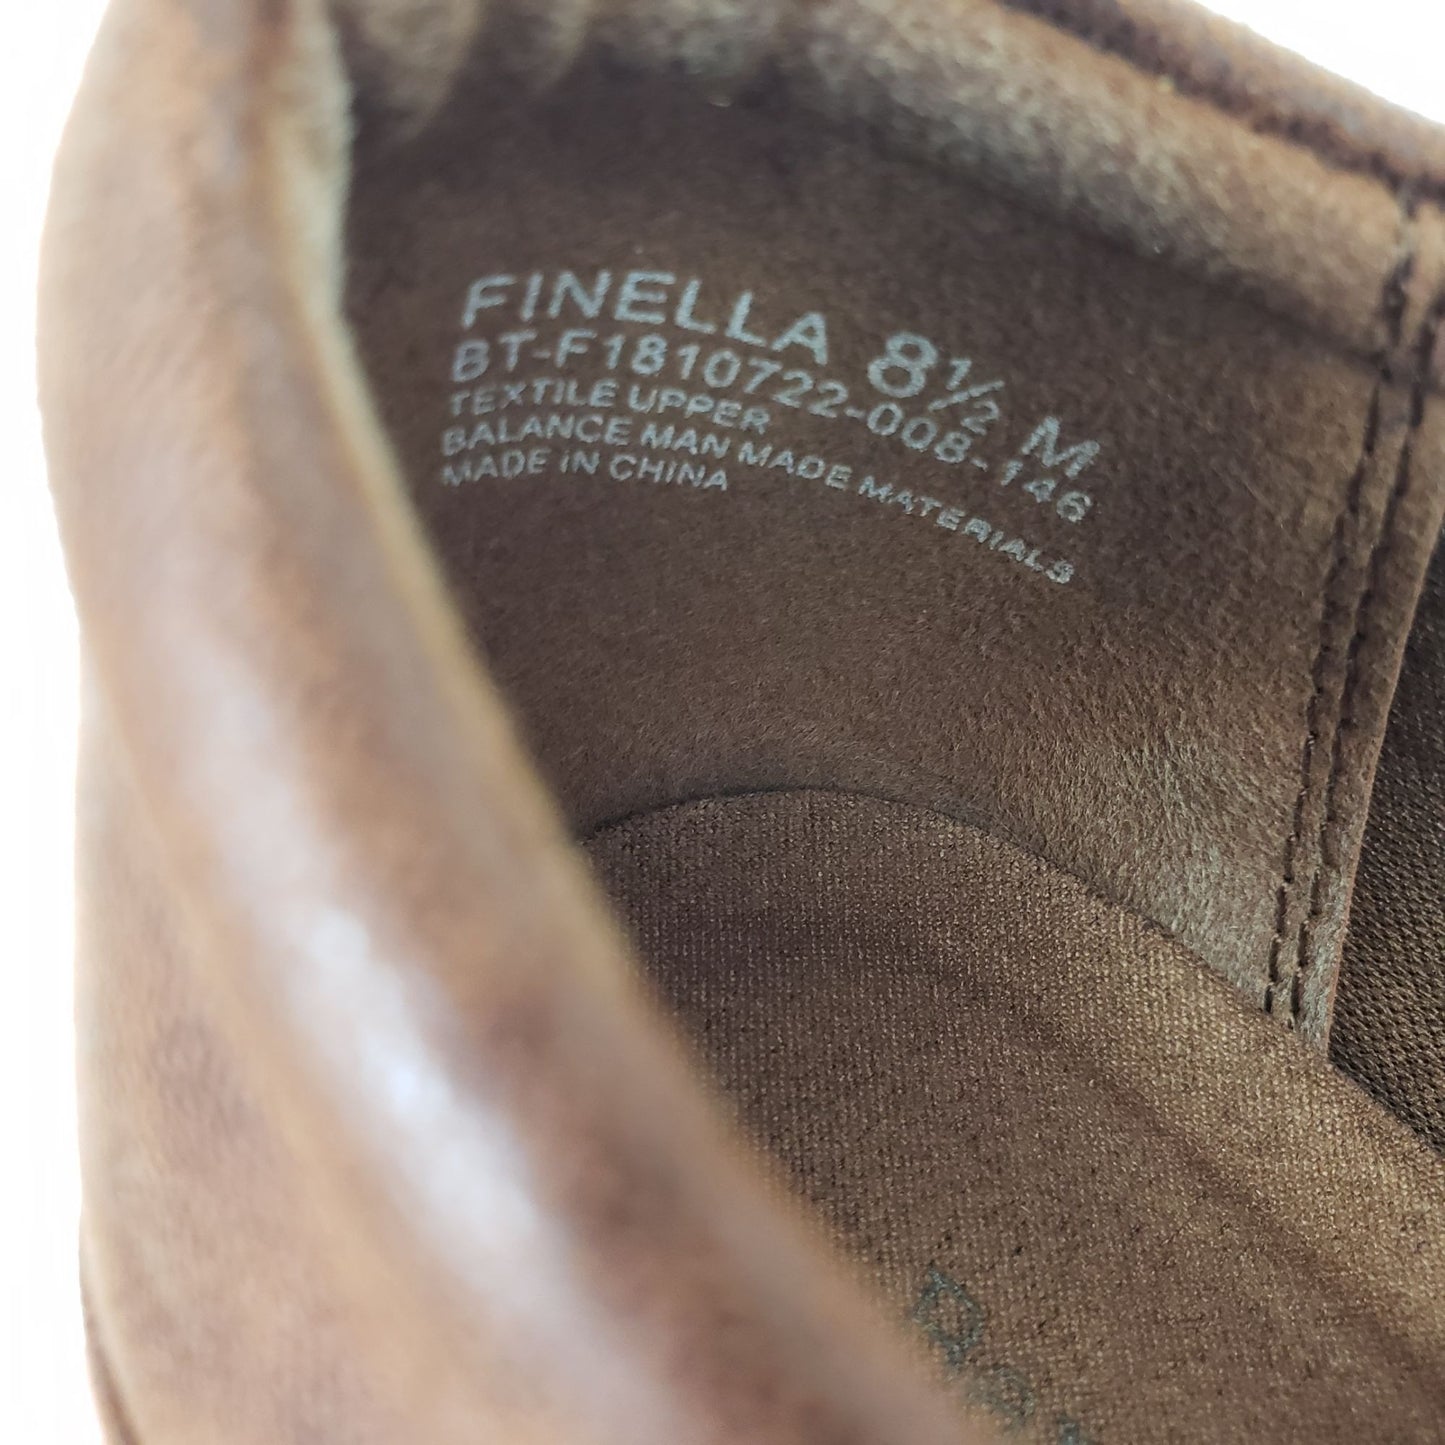 Baretraps Finella Vegan Leather Heeled Bootie Shoes Size 8.5